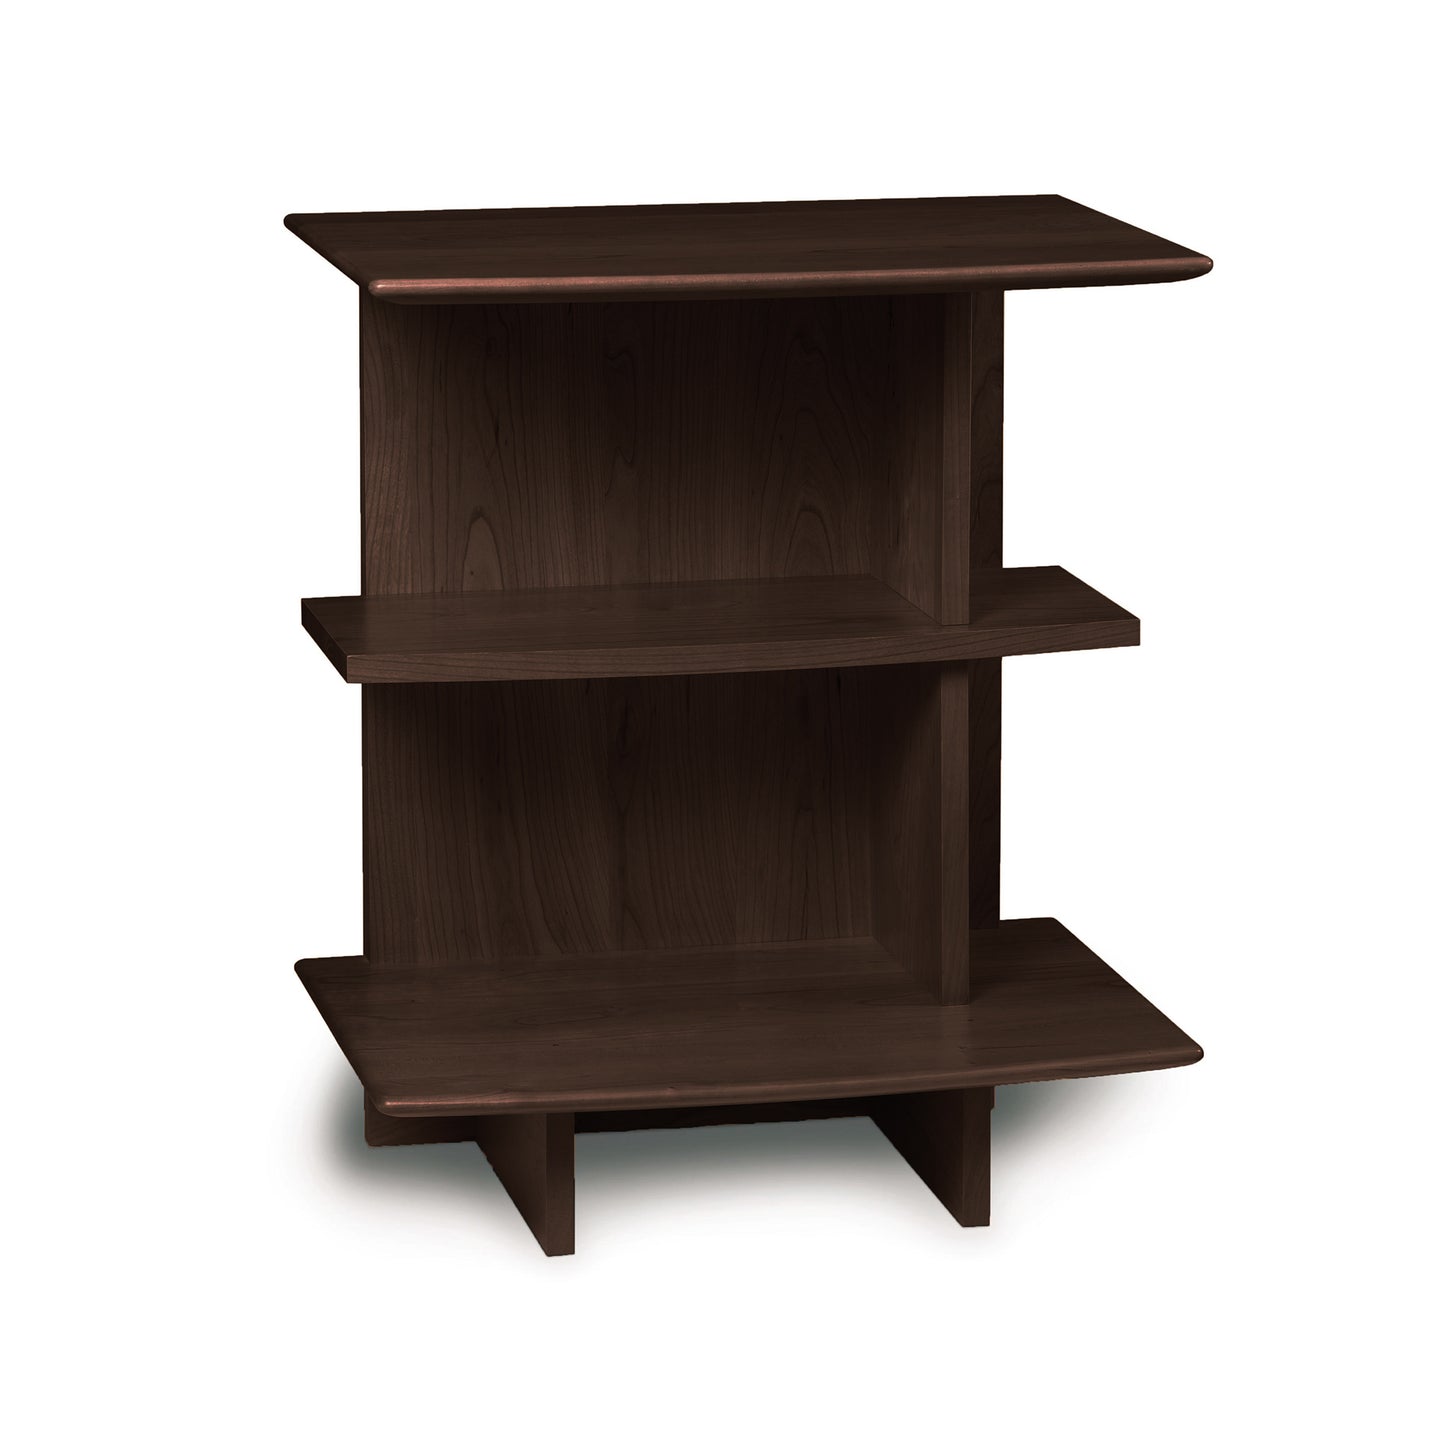 Copeland Furniture's Sarah Open Shelf Nightstand with three shelves.